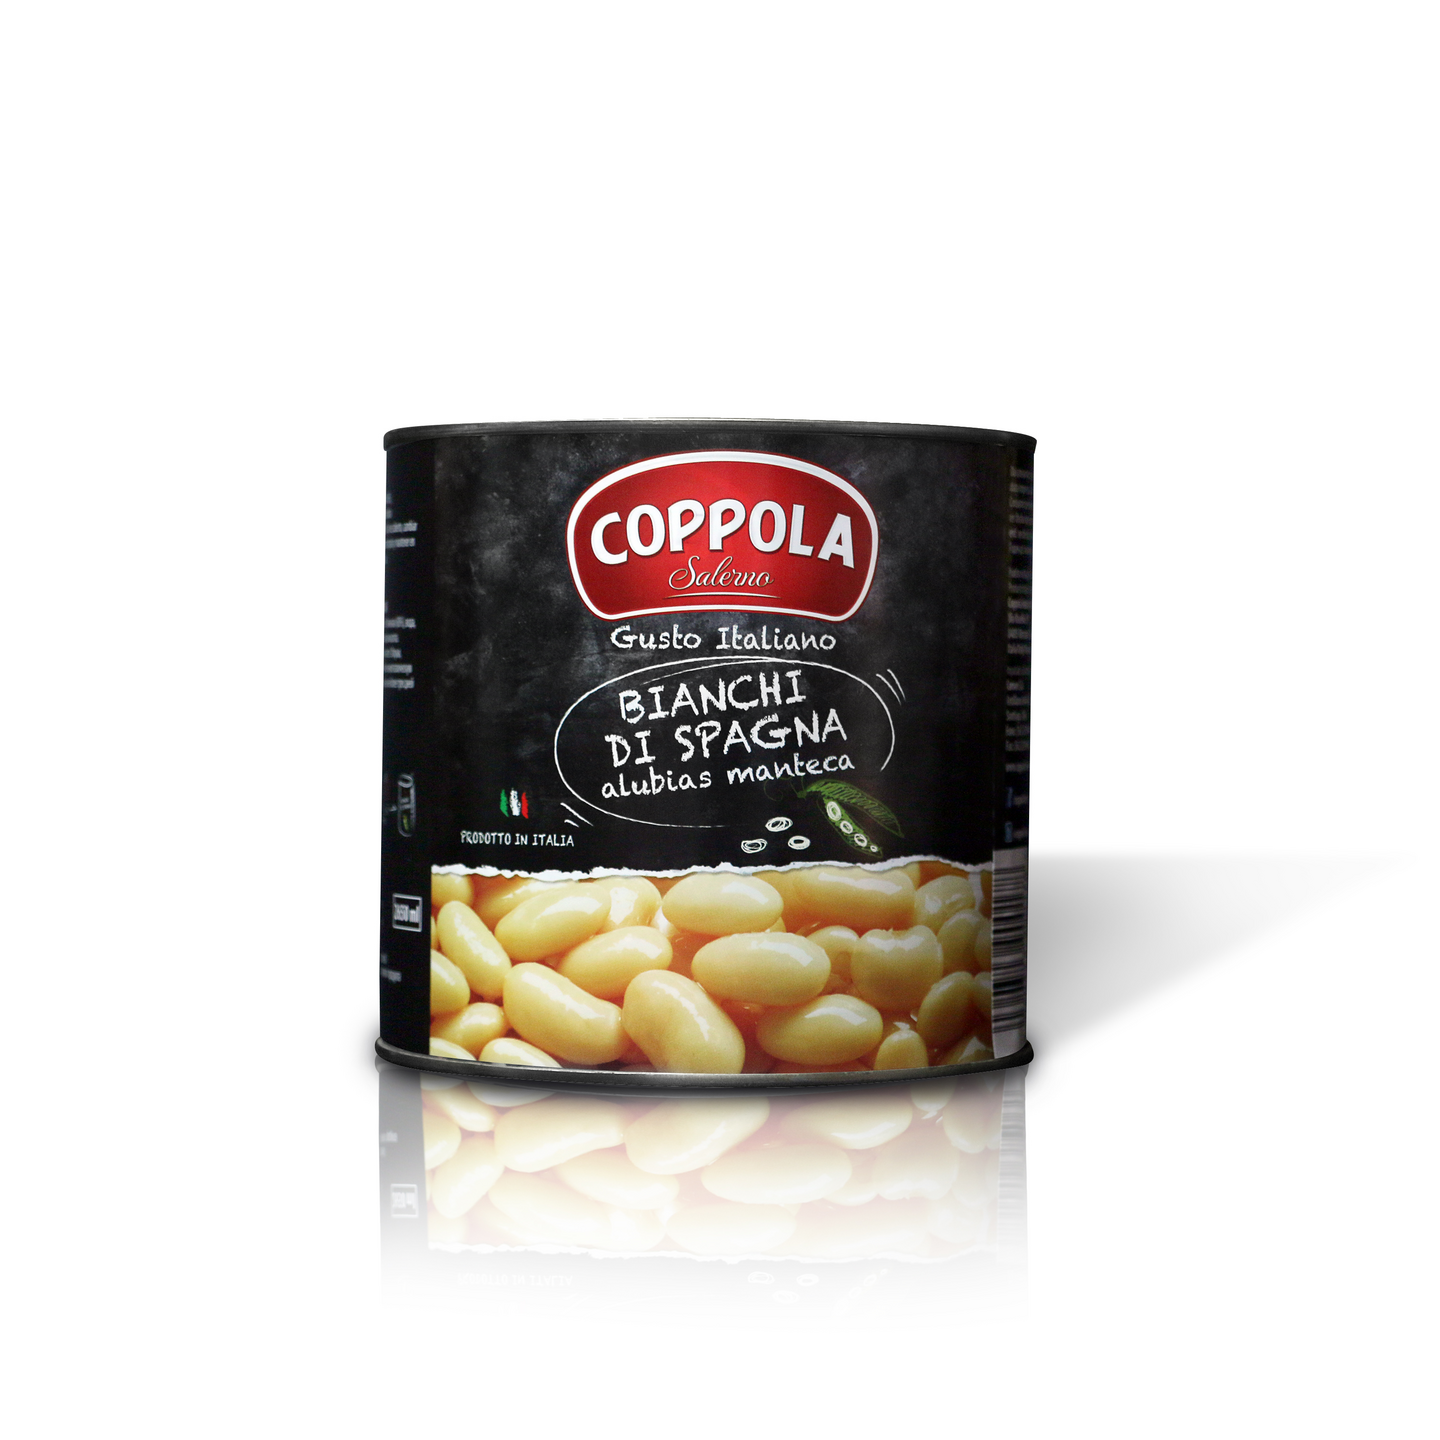 Coppola Bianchi di spagna voipavut 2,5kg/1,5kg